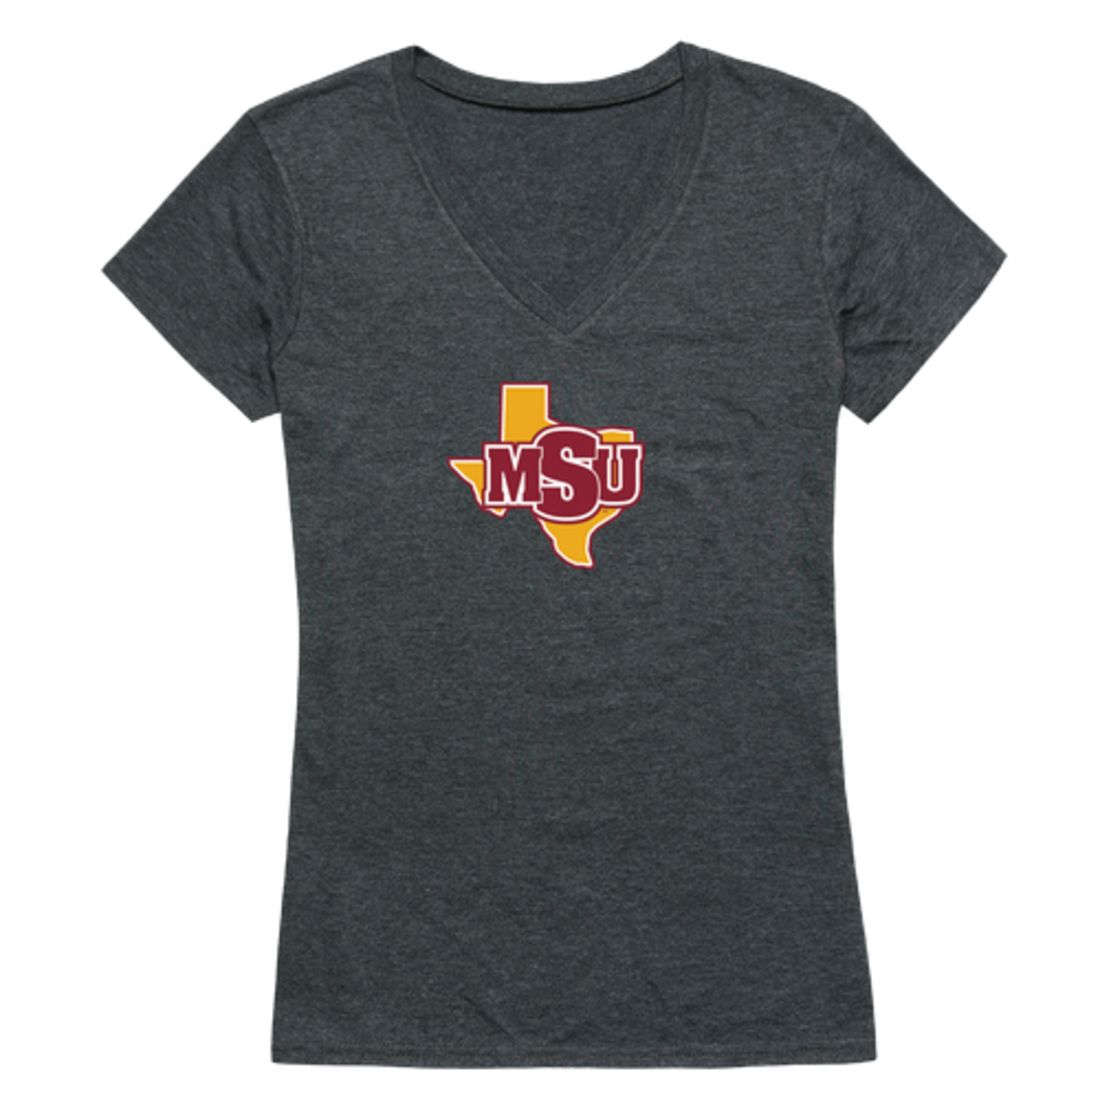 Midwestern State University Mustangs Womens Cinder T-Shirt Tee